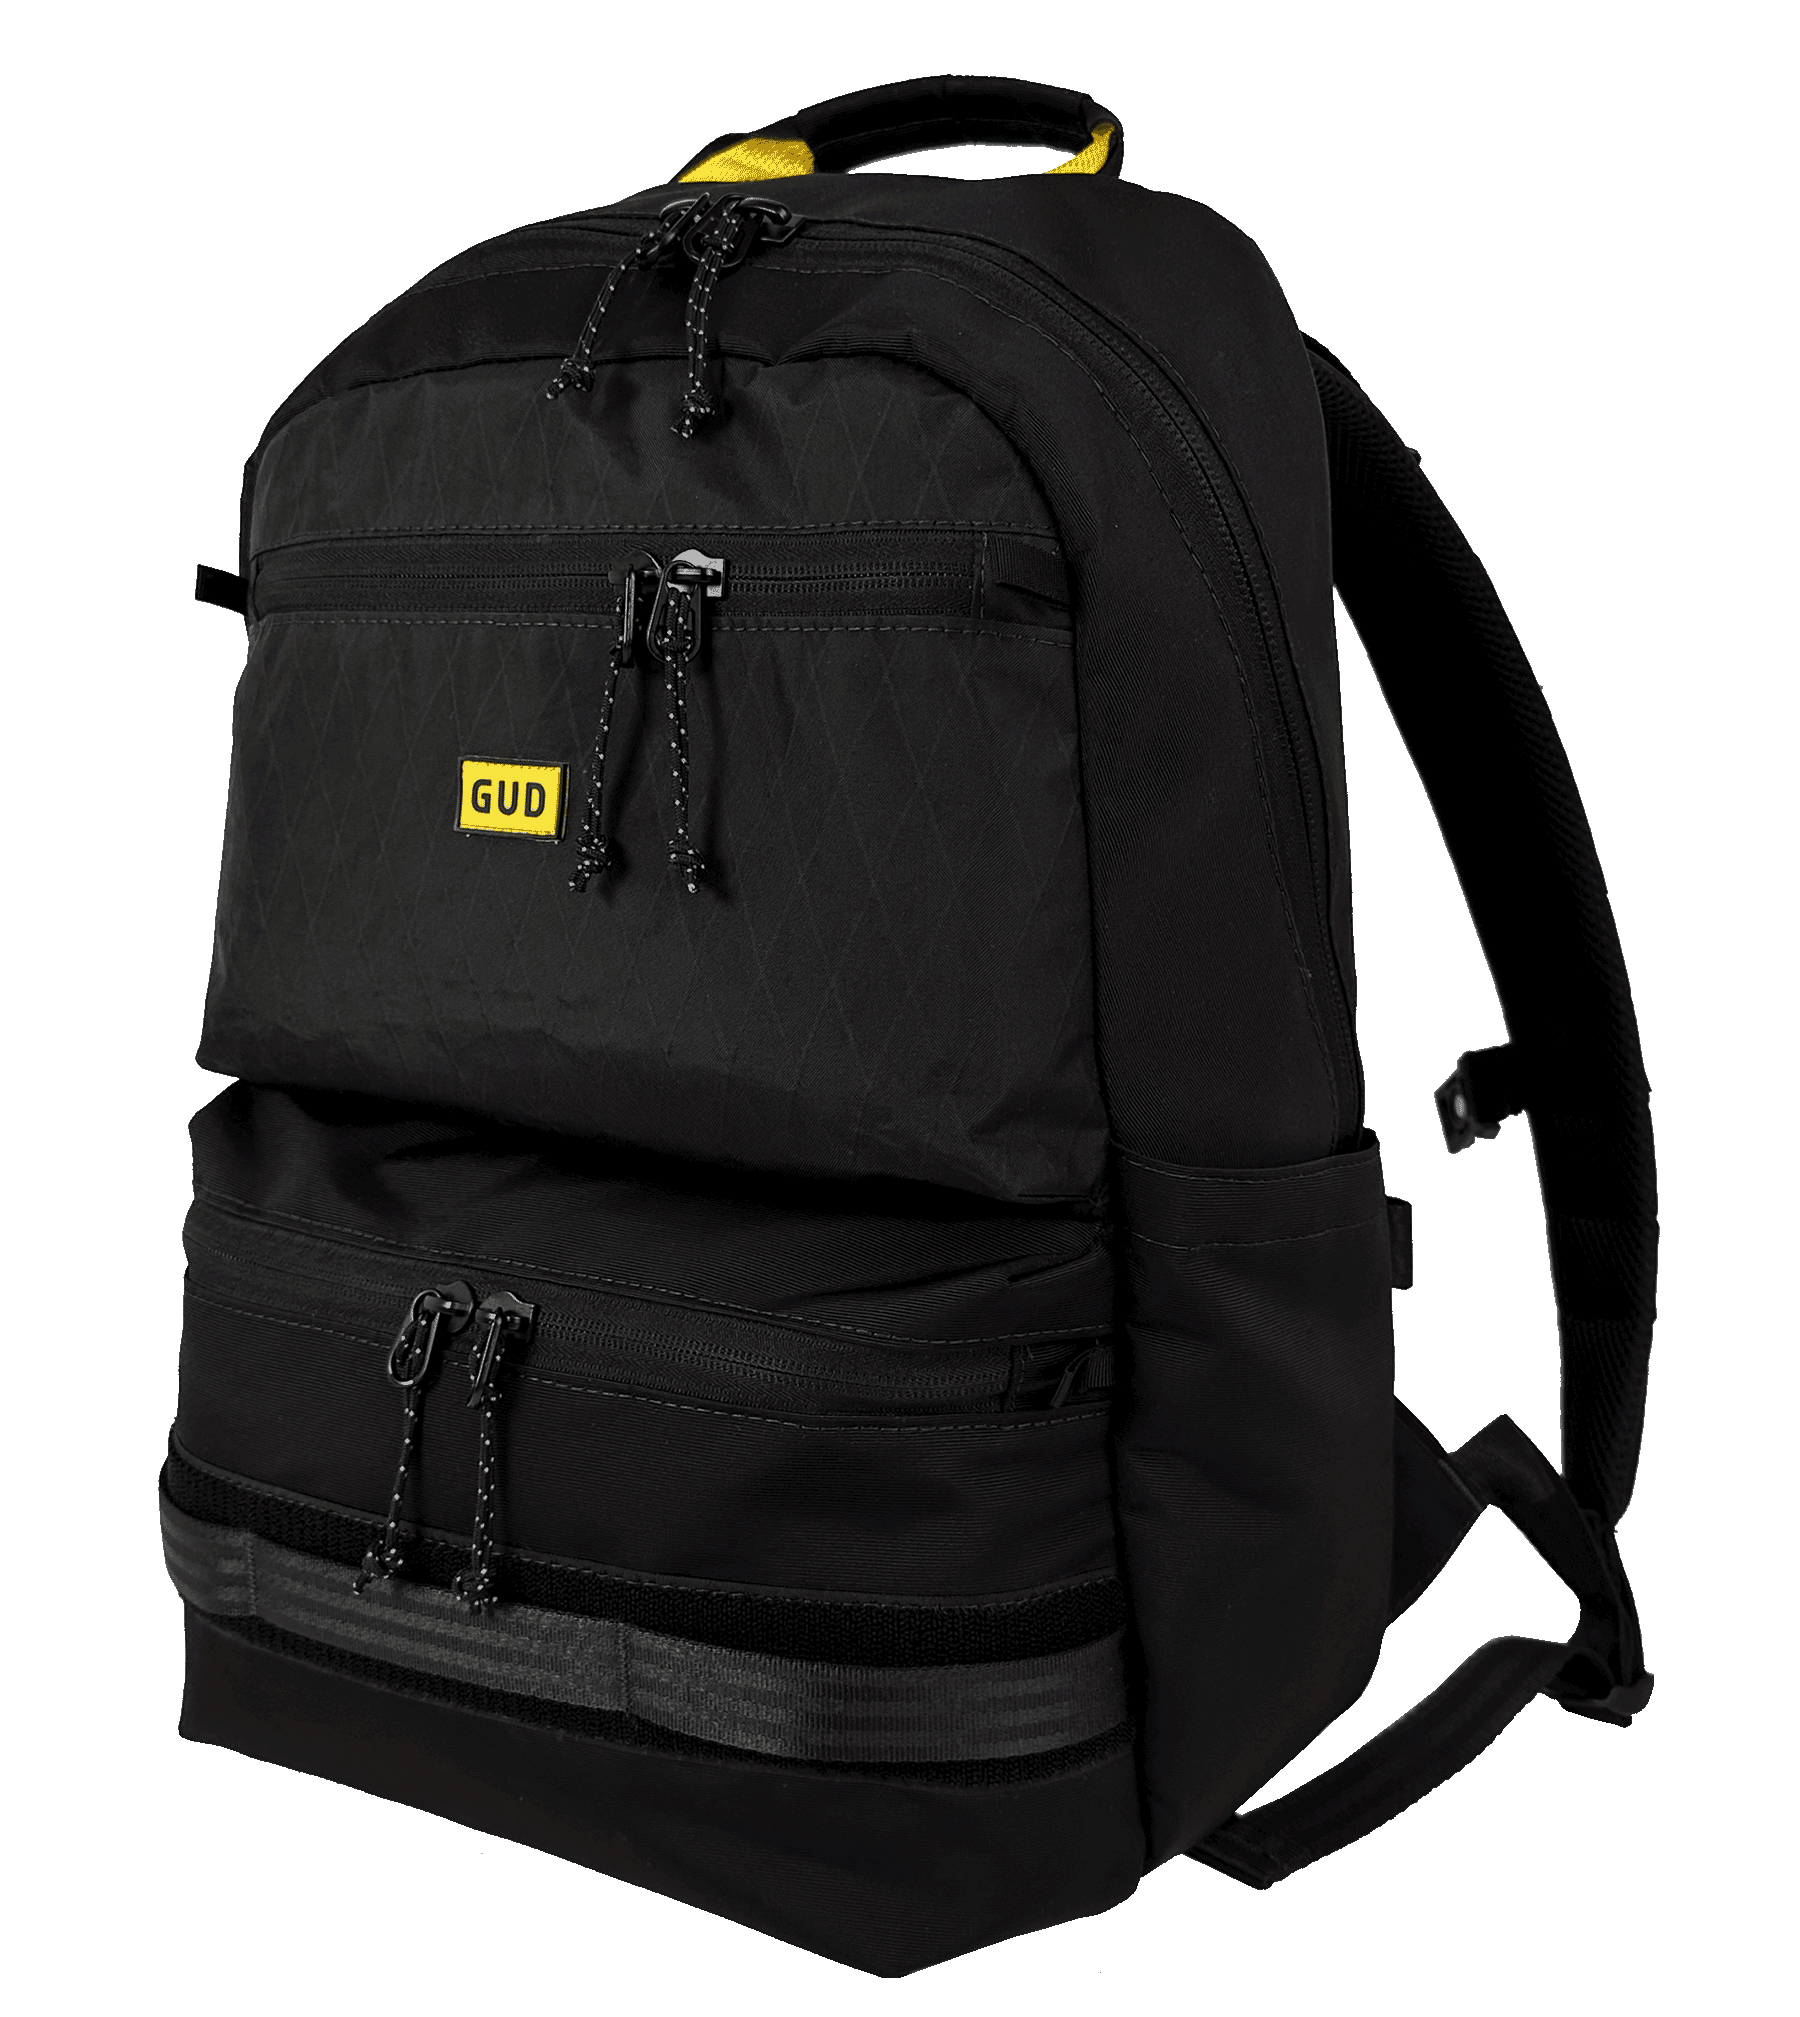 Gud Cargo Backpack Black - GENTLERIDE.EU